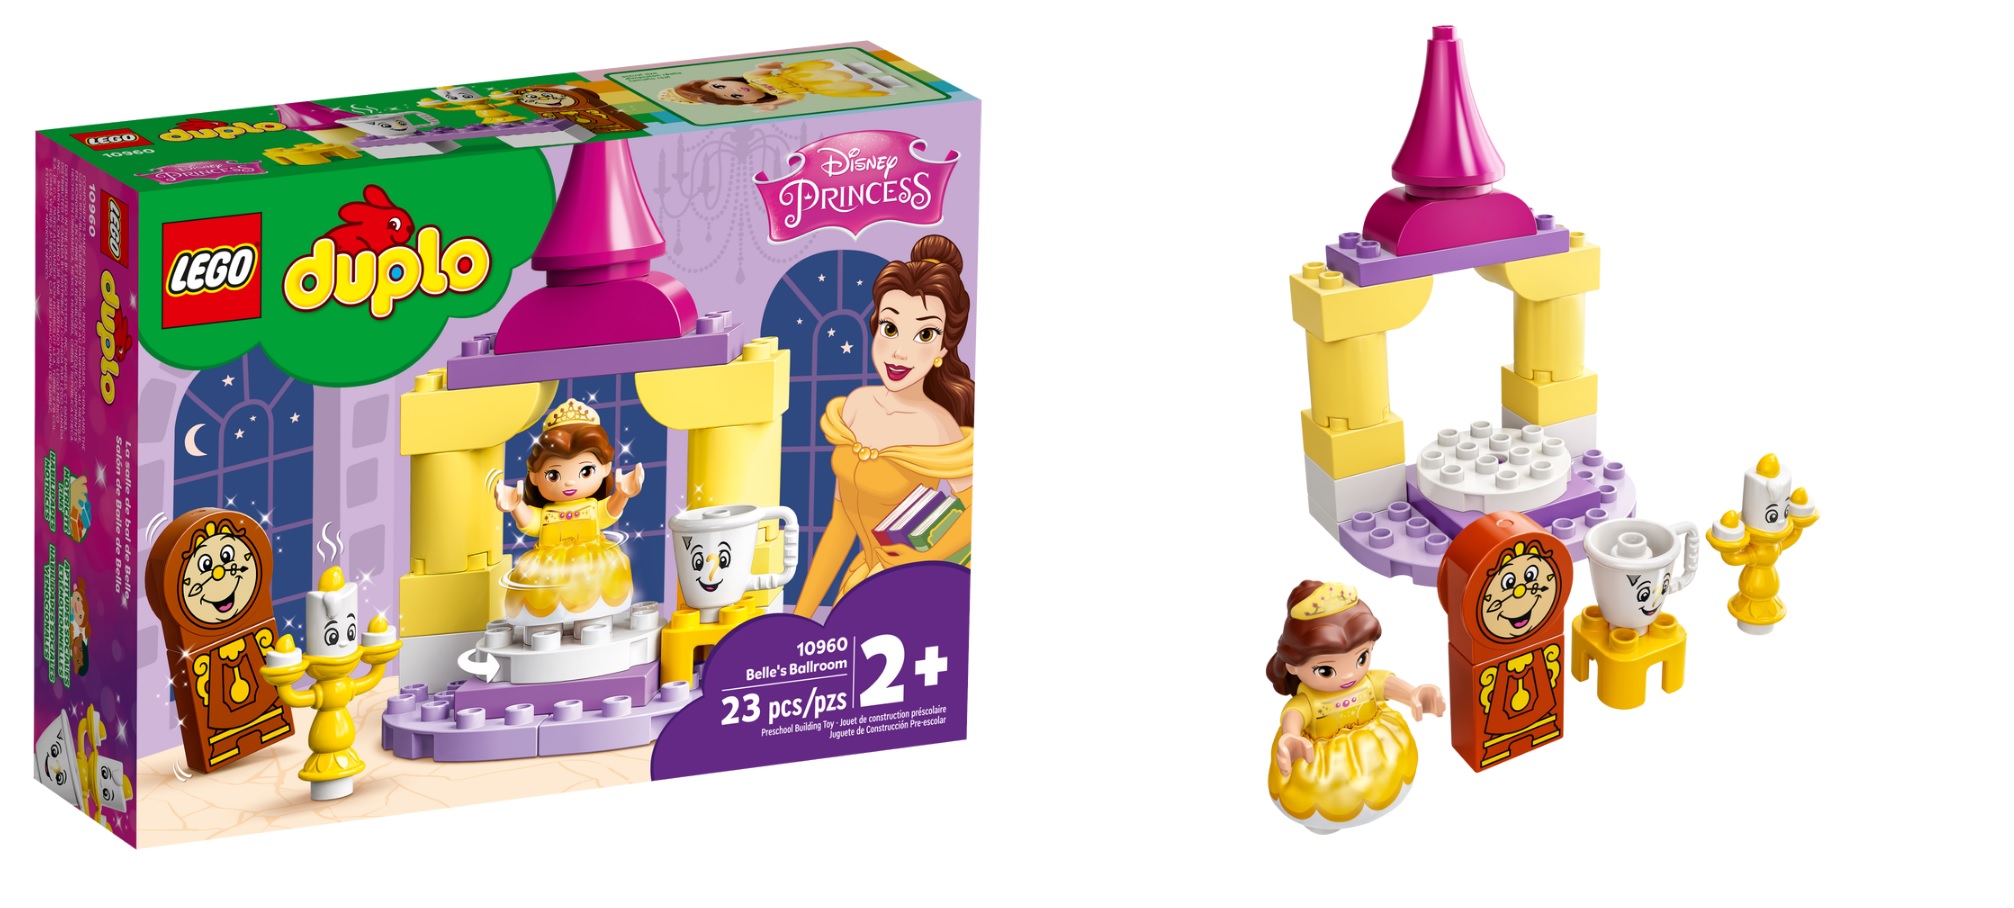 January Winter 2022 LEGO Disney Princess, Frozen & Duplo Set Prices & Release Dates (43198 43199 10960) - Toys N Bricks